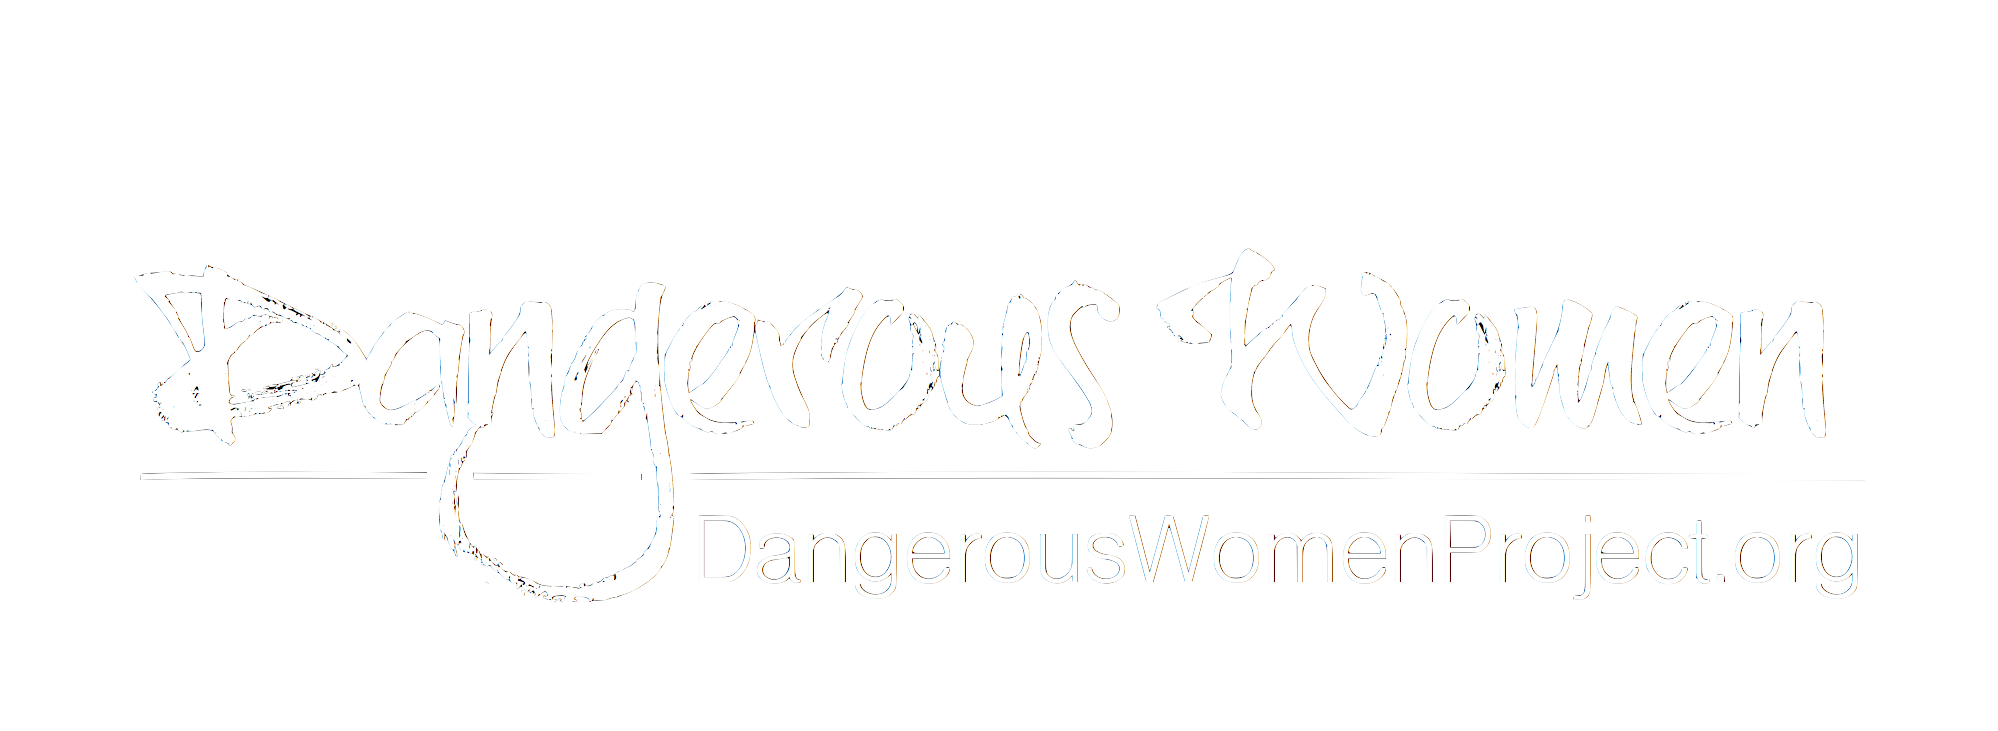 Dangerous Women Project Home Page